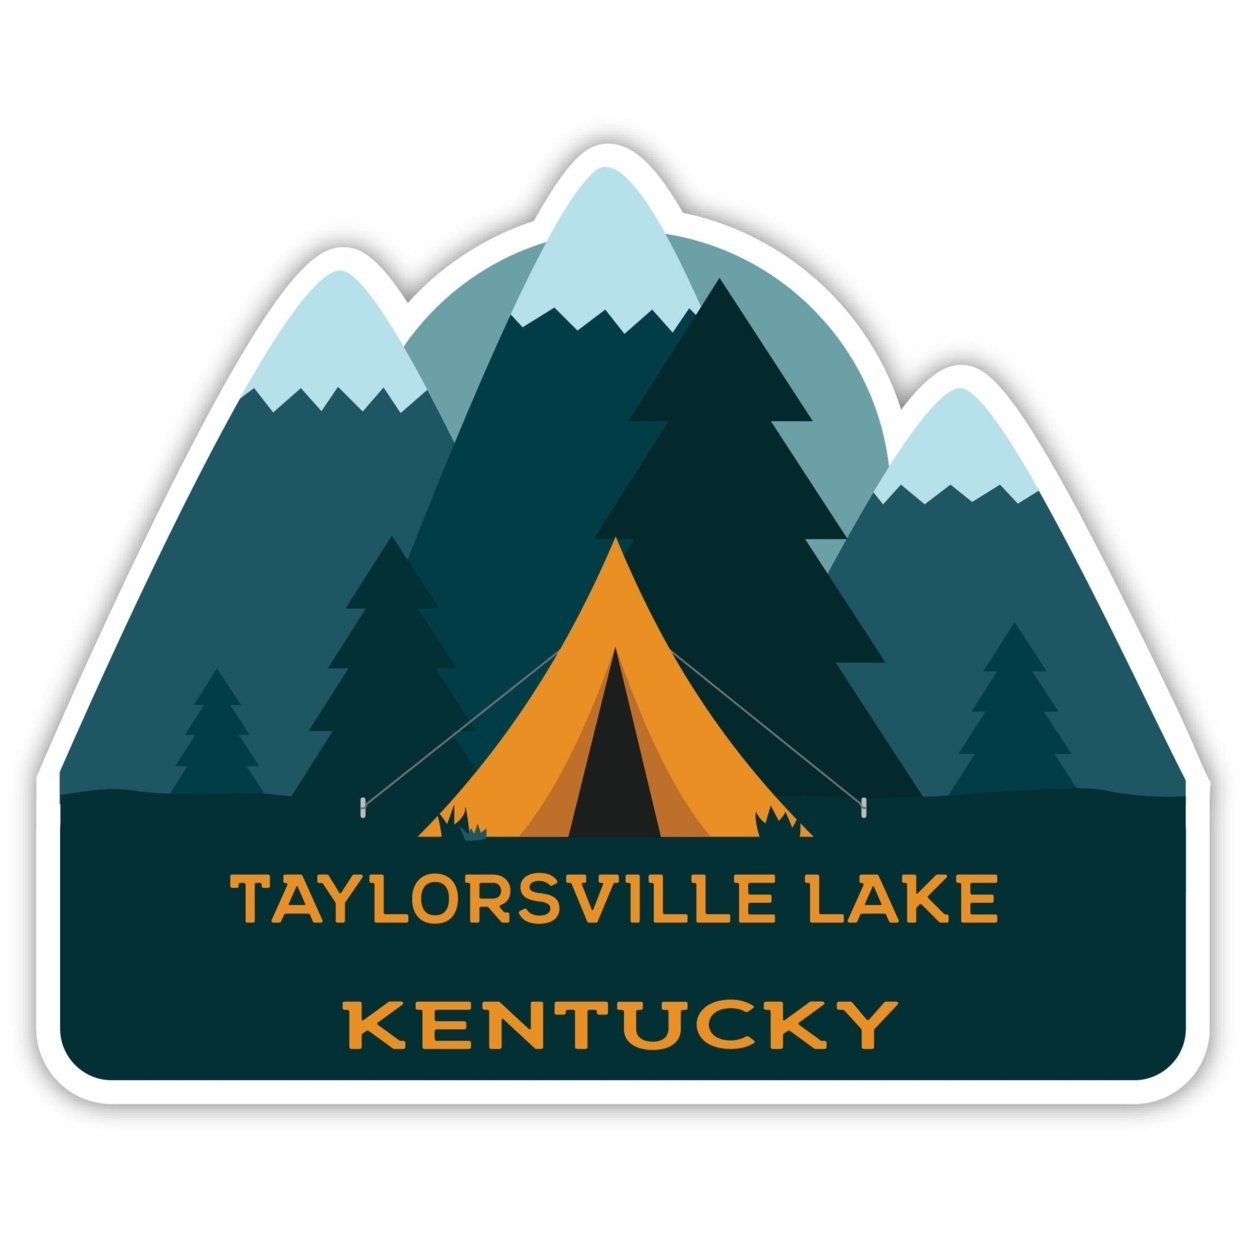 Taylorsville Lake Kentucky Souvenir Decorative Stickers (Choose Theme And Size) - Single Unit, 2-Inch, Tent